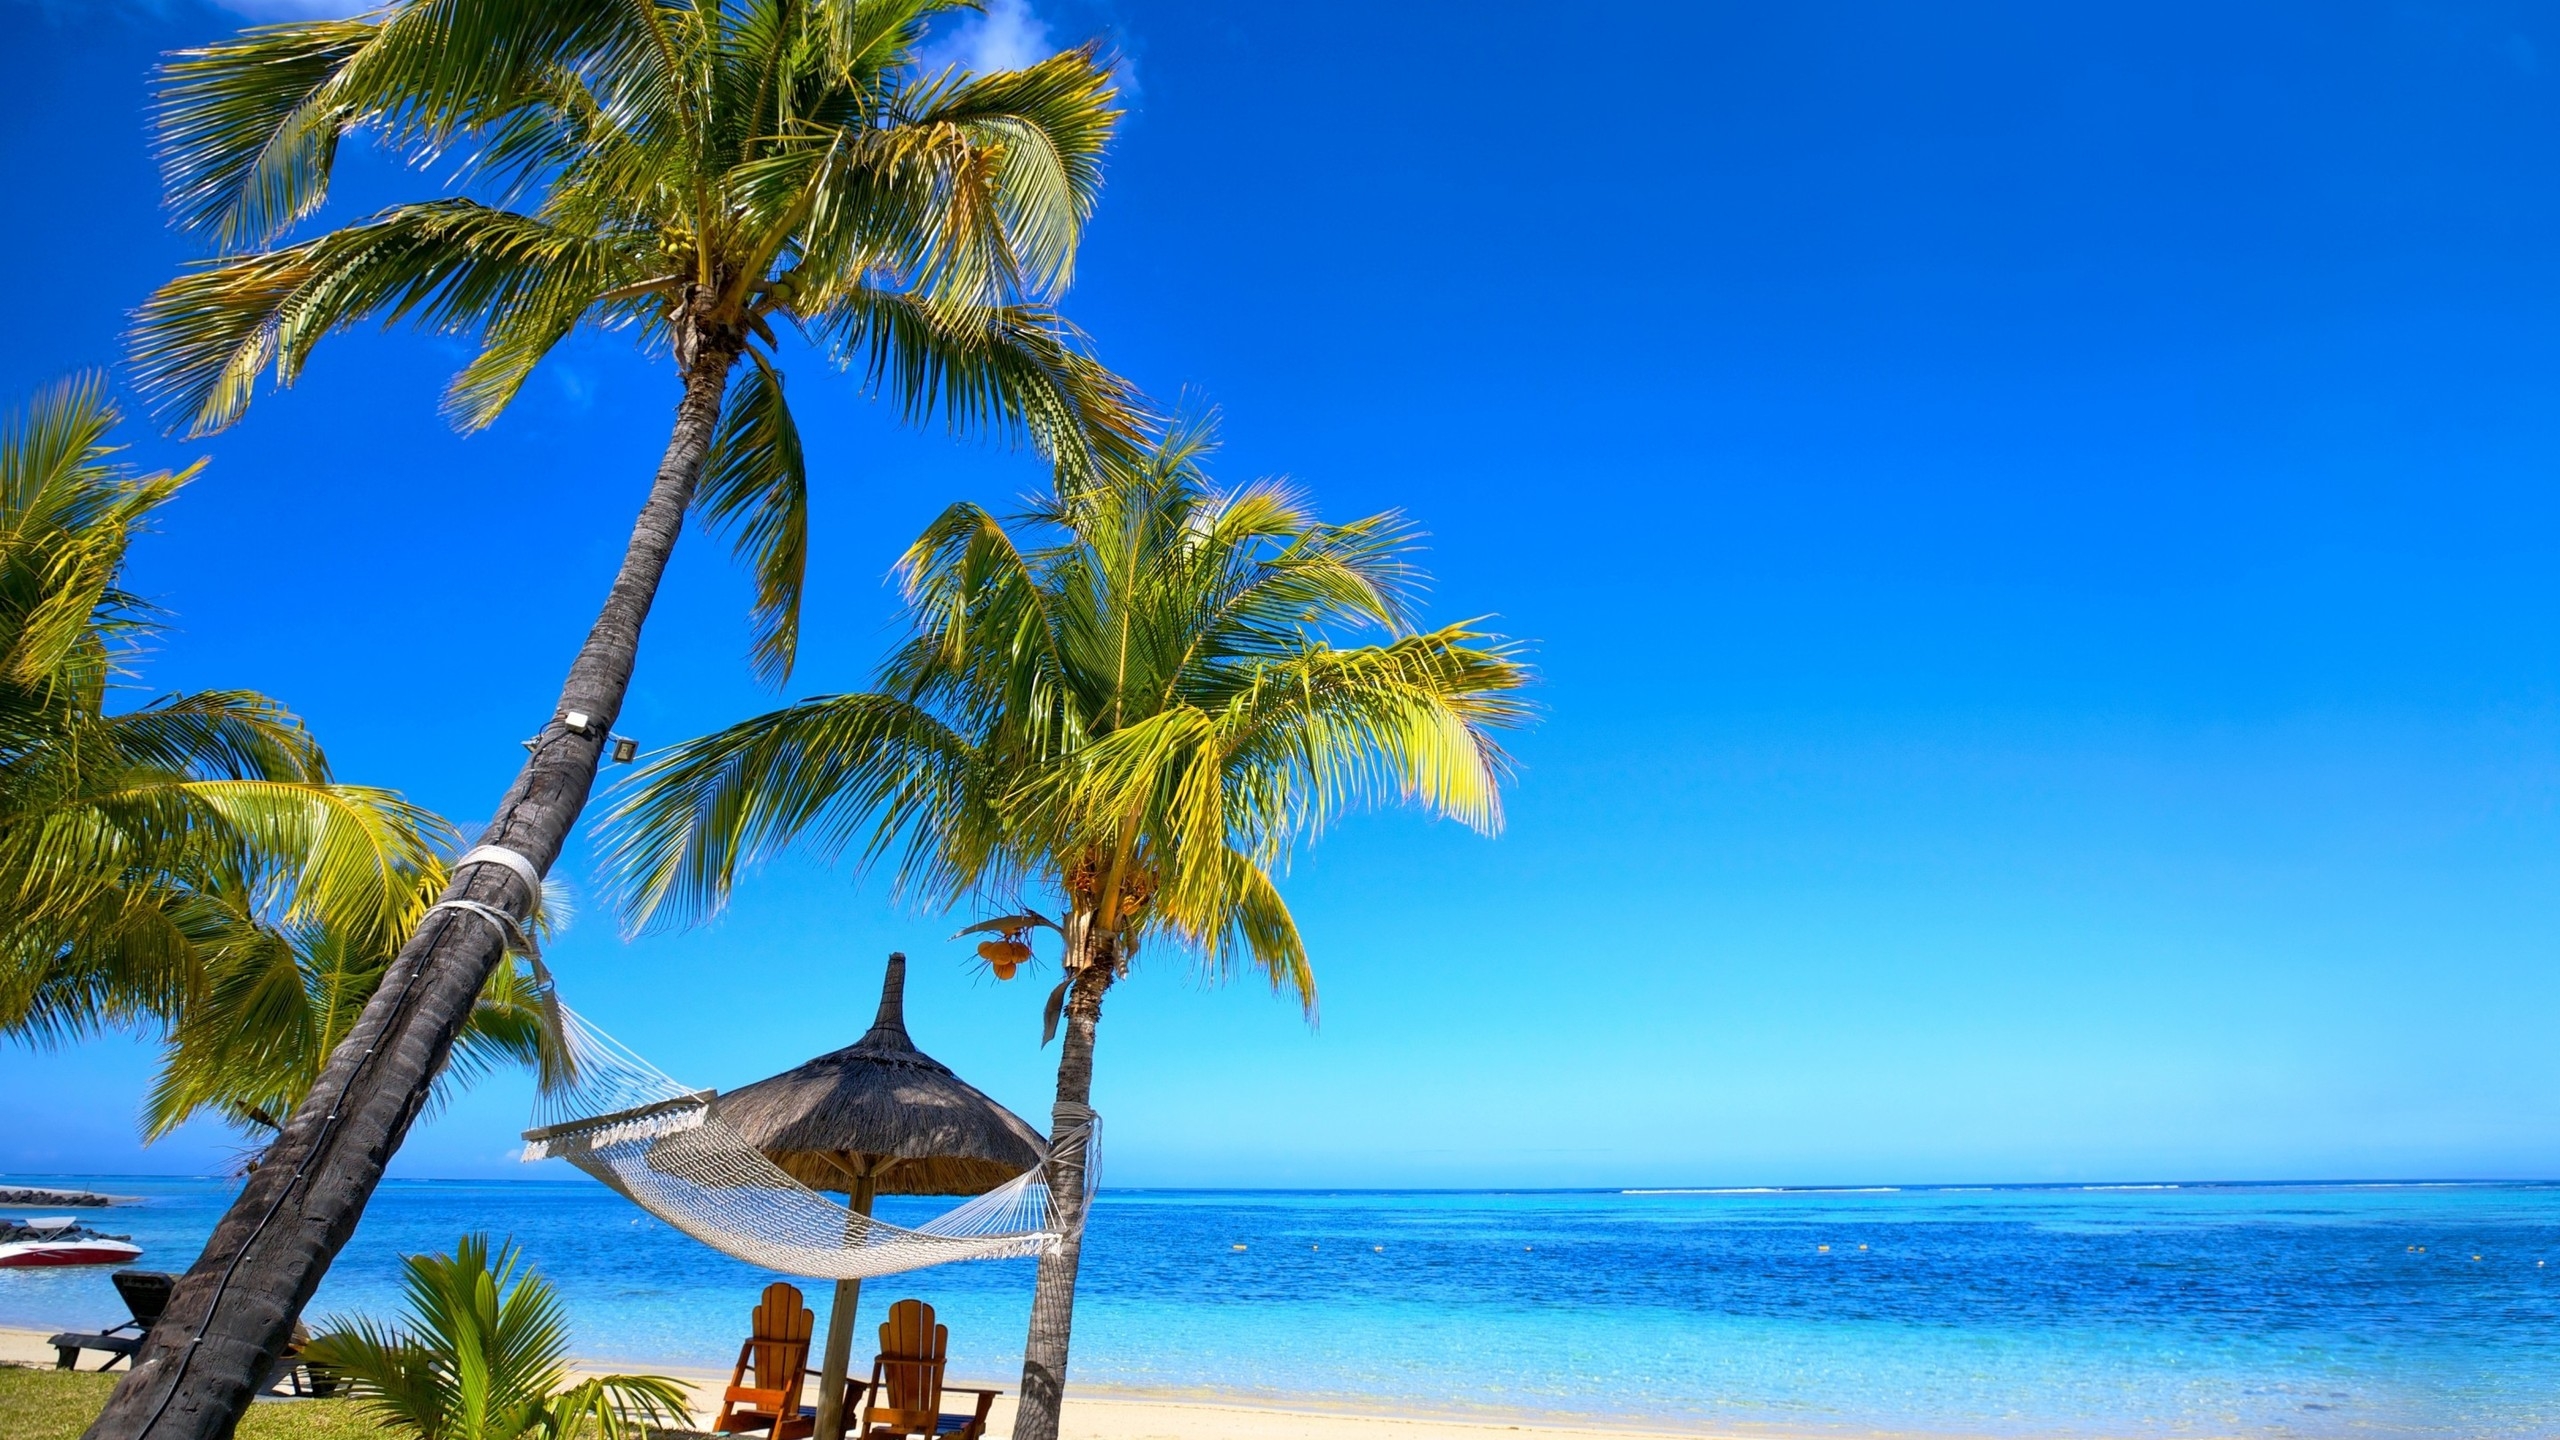 Paradise Palm Beach  for 2560x1440 HDTV resolution